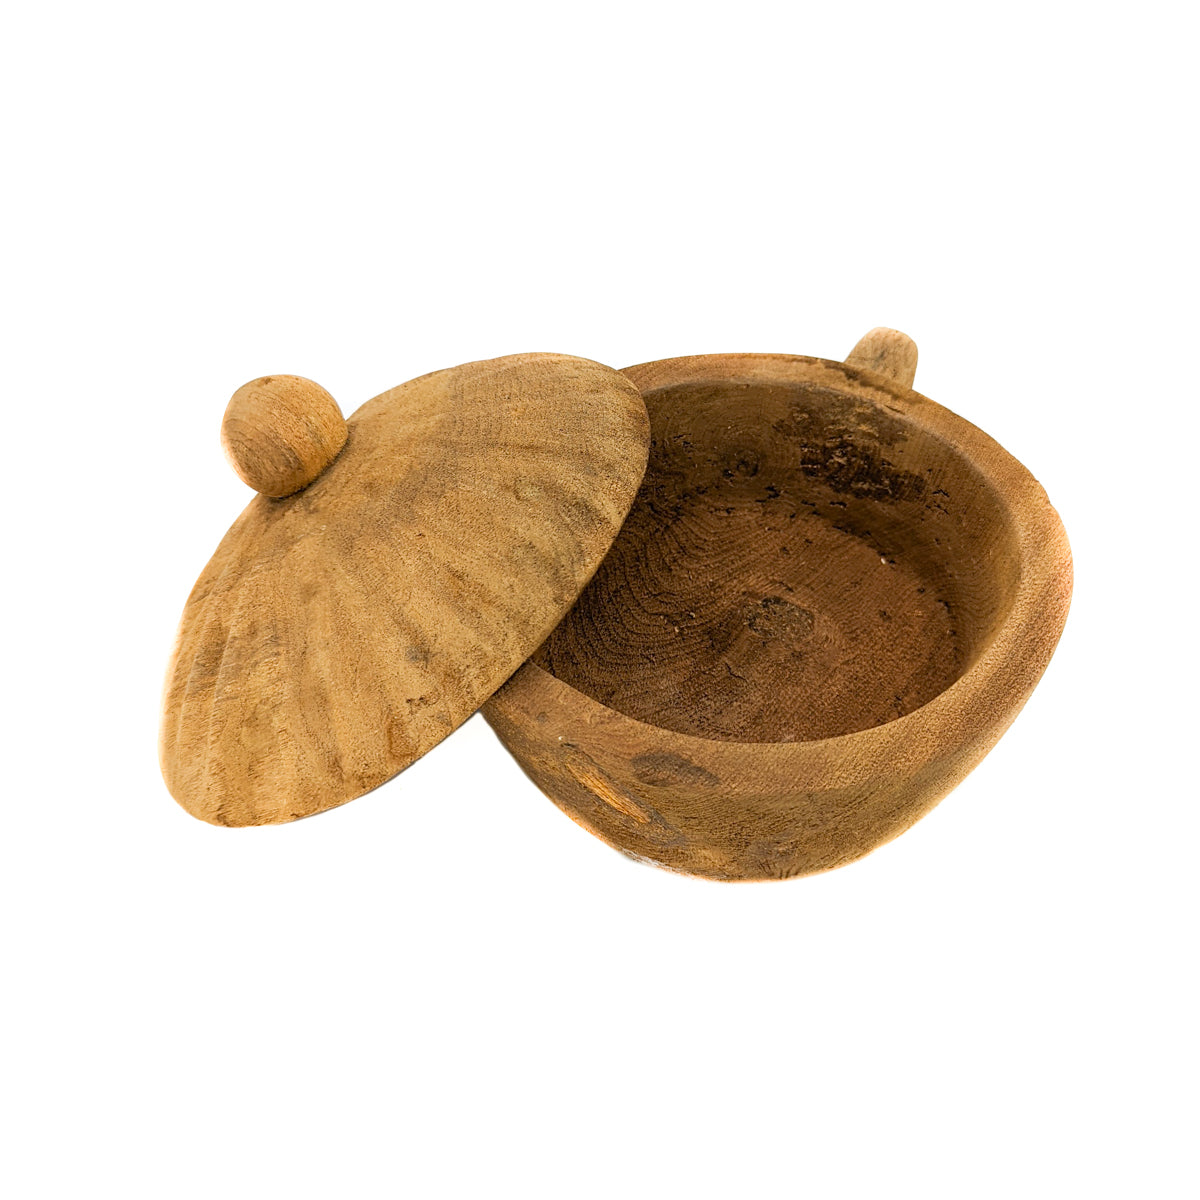 Rarámuri (Tarahumara) Wooden Bowl with Lid and Handle